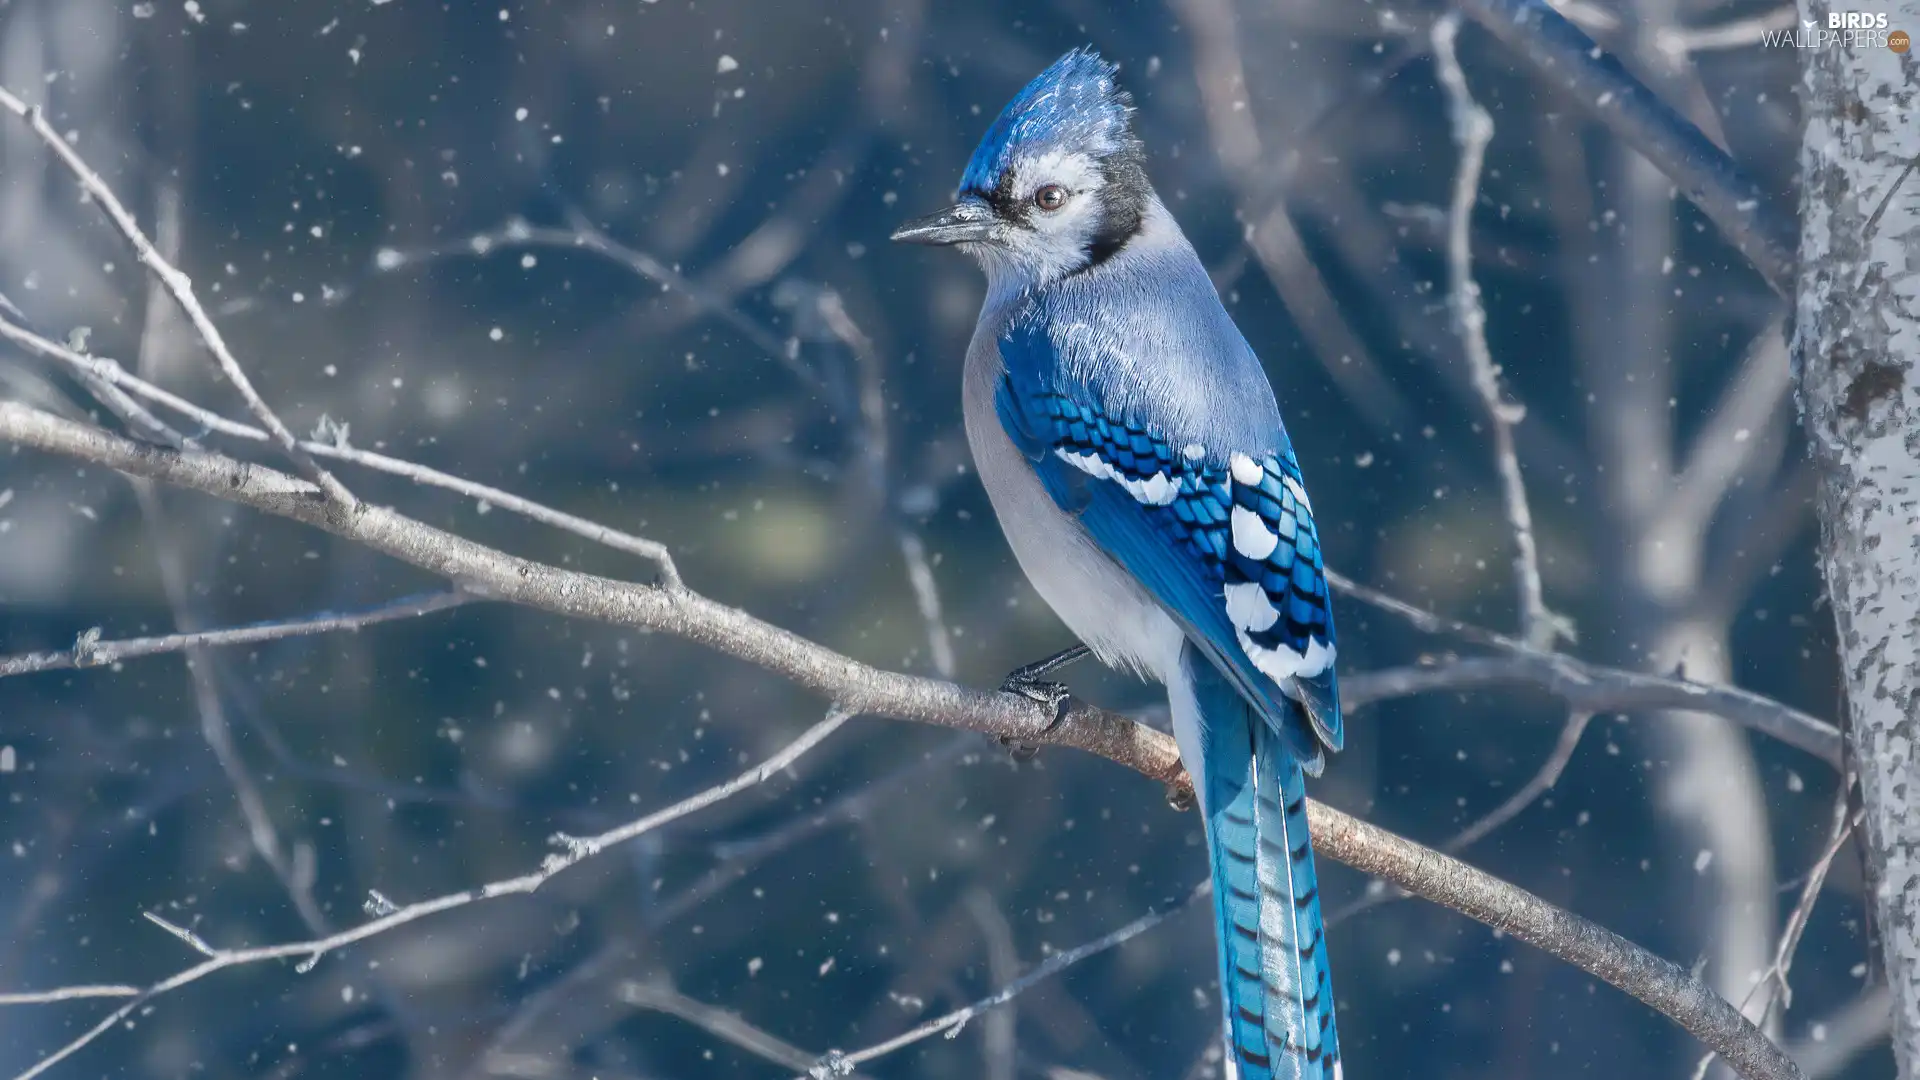 flakes, snow, Blue jay, branch pics, Bird